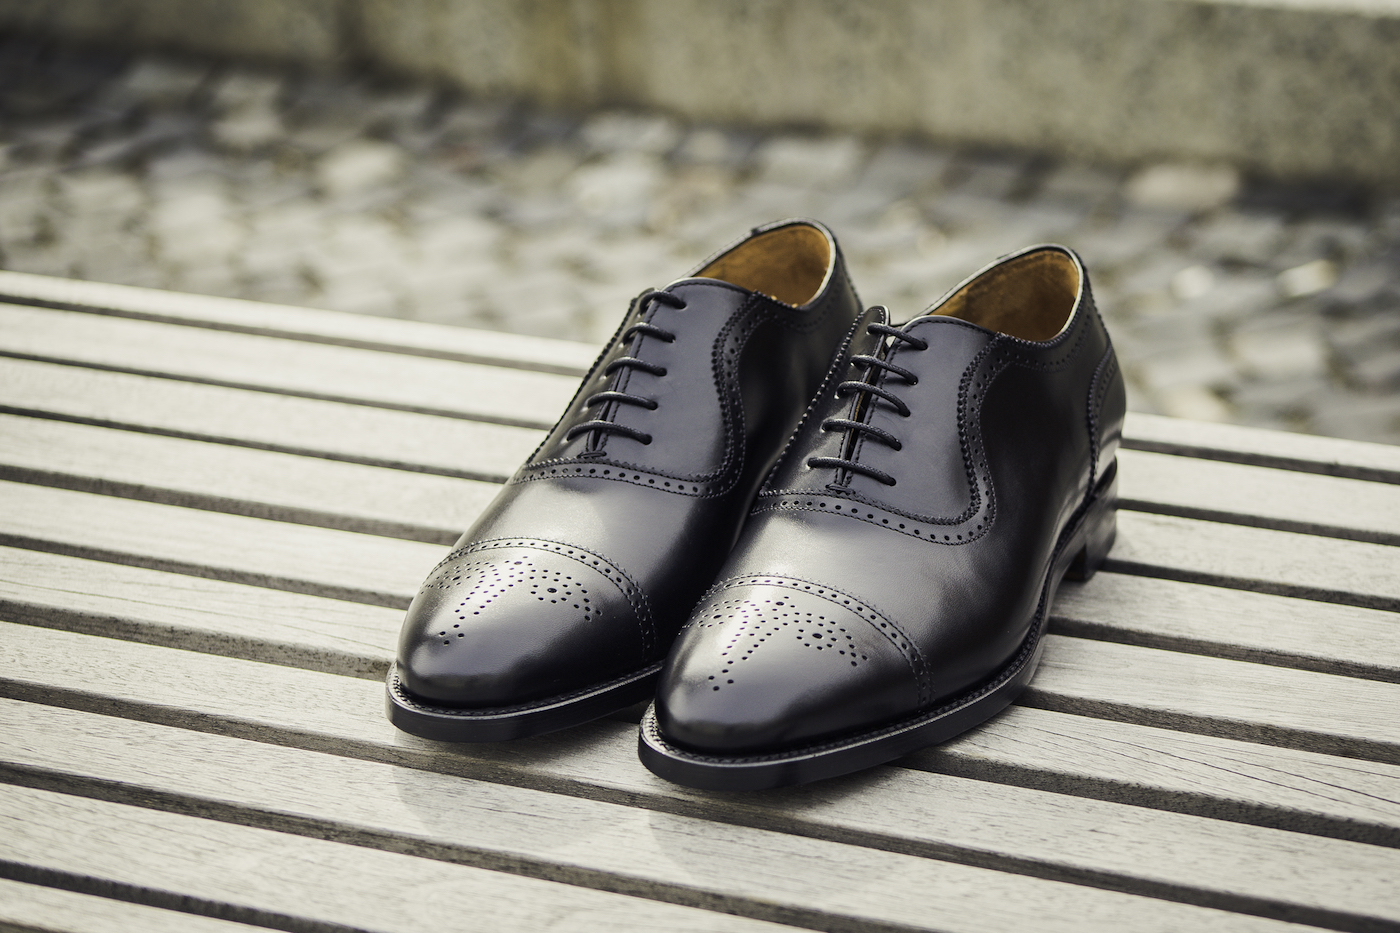 Berwick Stark - Black - Berwick - Oxford - Shoes, Shoes - Gentleman Store